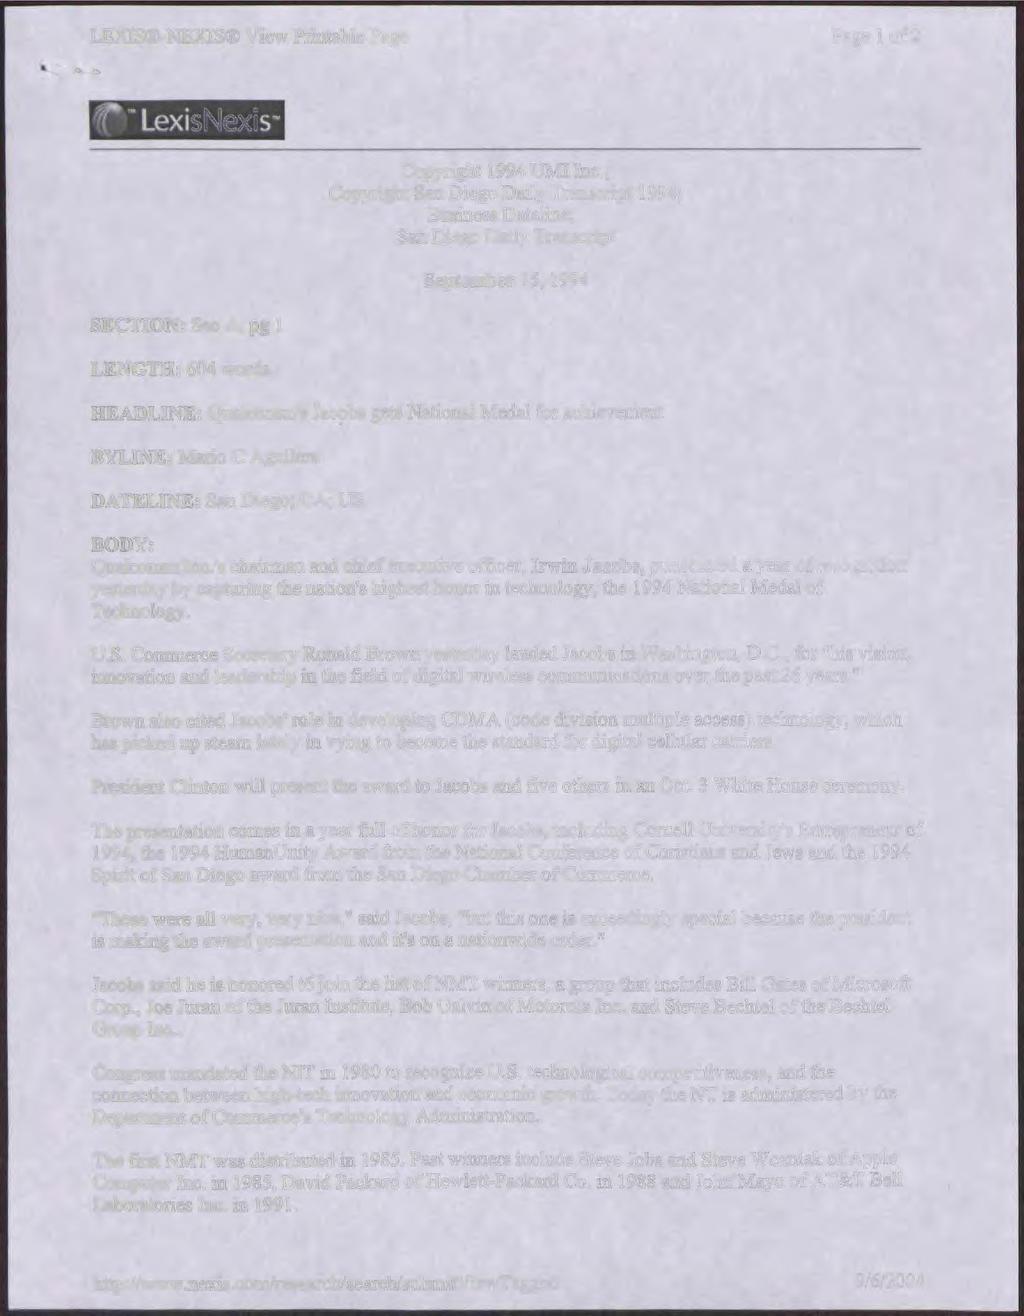 LEXIS -NEXISO View Printable Page Page 1 of 2 1*P LexisNexis- SECTION: Sec A; pg 1 LENGTH: 604 words Copyright 1994 UMI Inc.